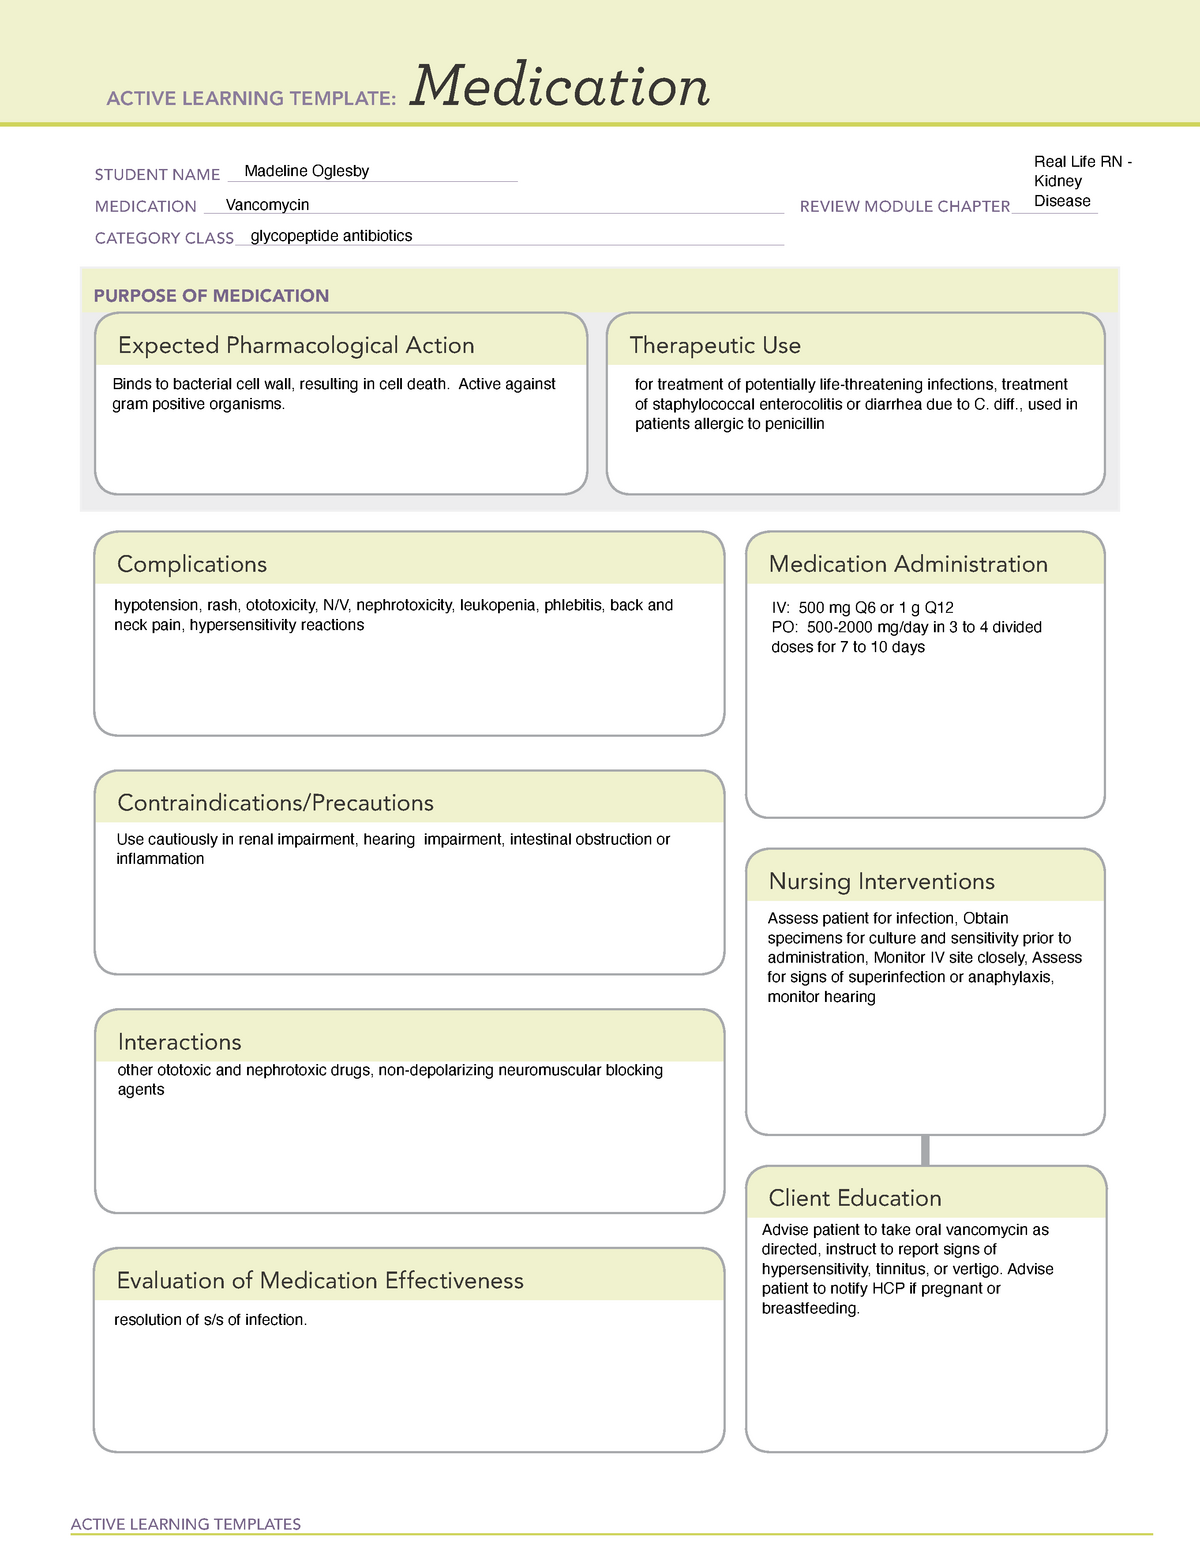 vancomycin-medication-template